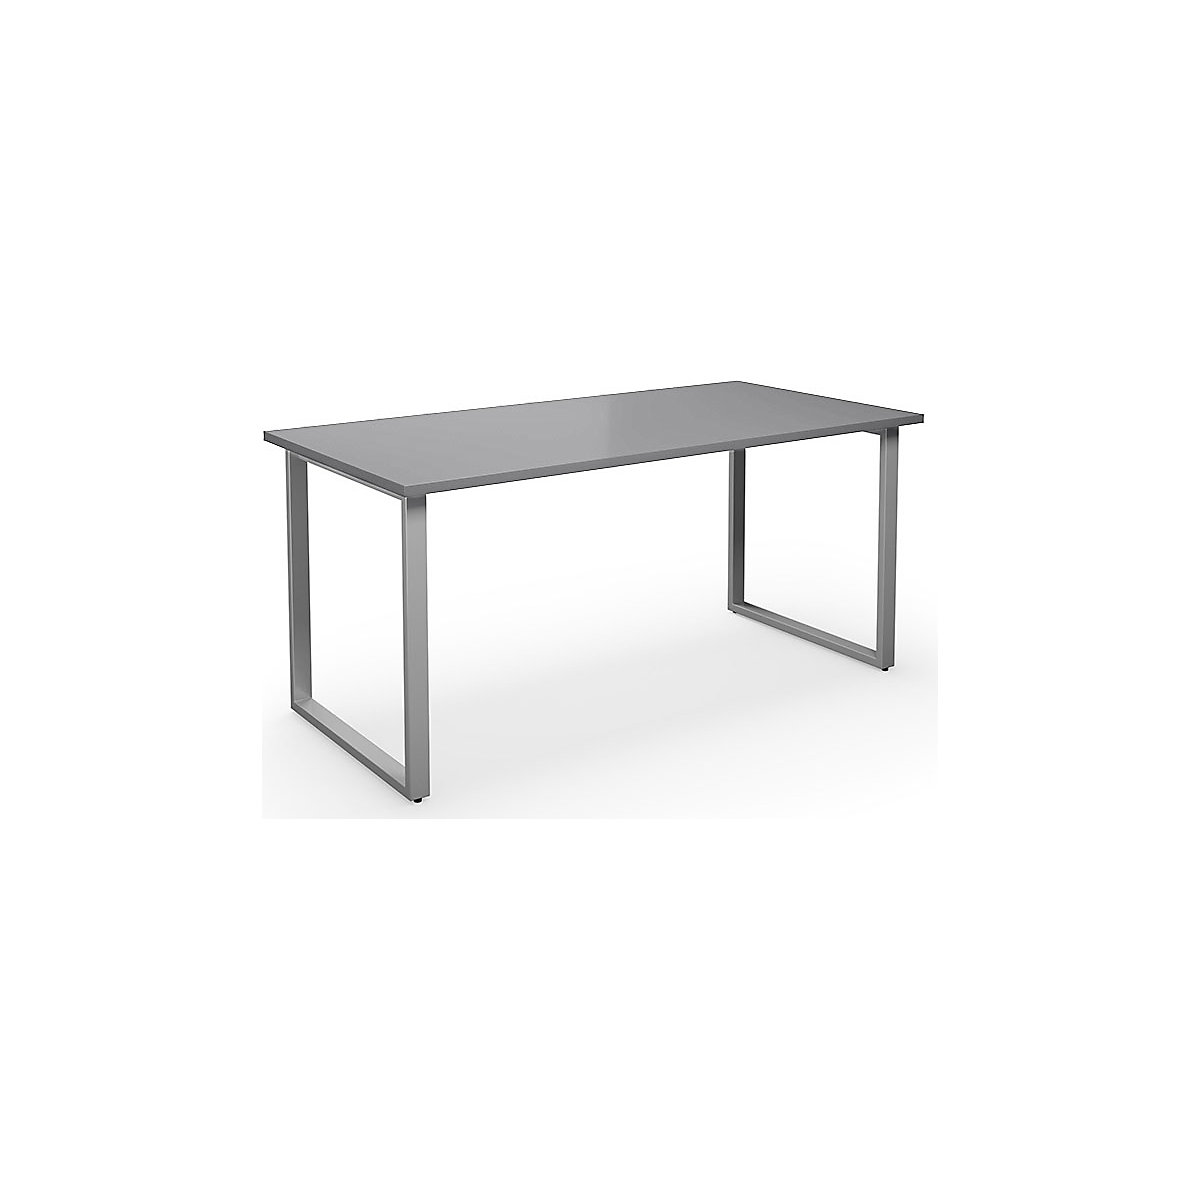 DUO-O multi-purpose desk, straight tabletop, WxD 1600 x 800 mm, light grey, silver-12